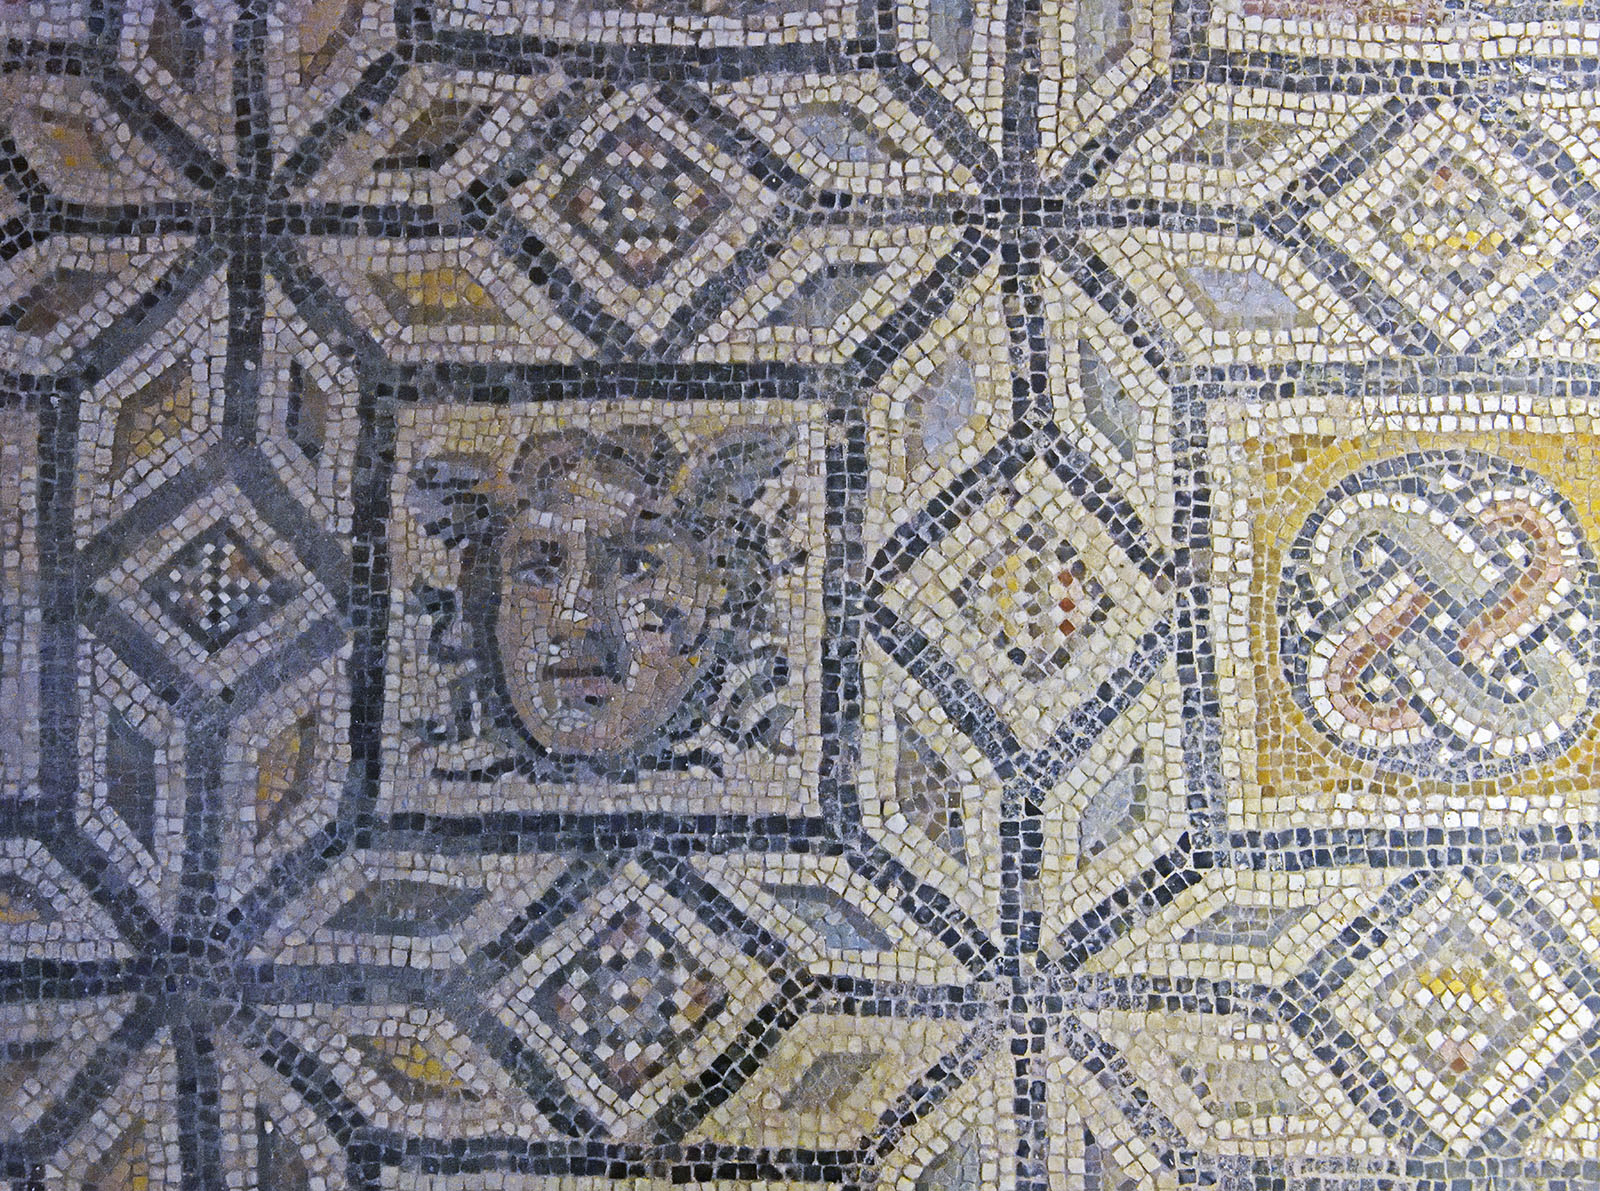 Antakya Archaeological Museum Dionysos and Ariadne mosaic sept 2019 5866.jpg